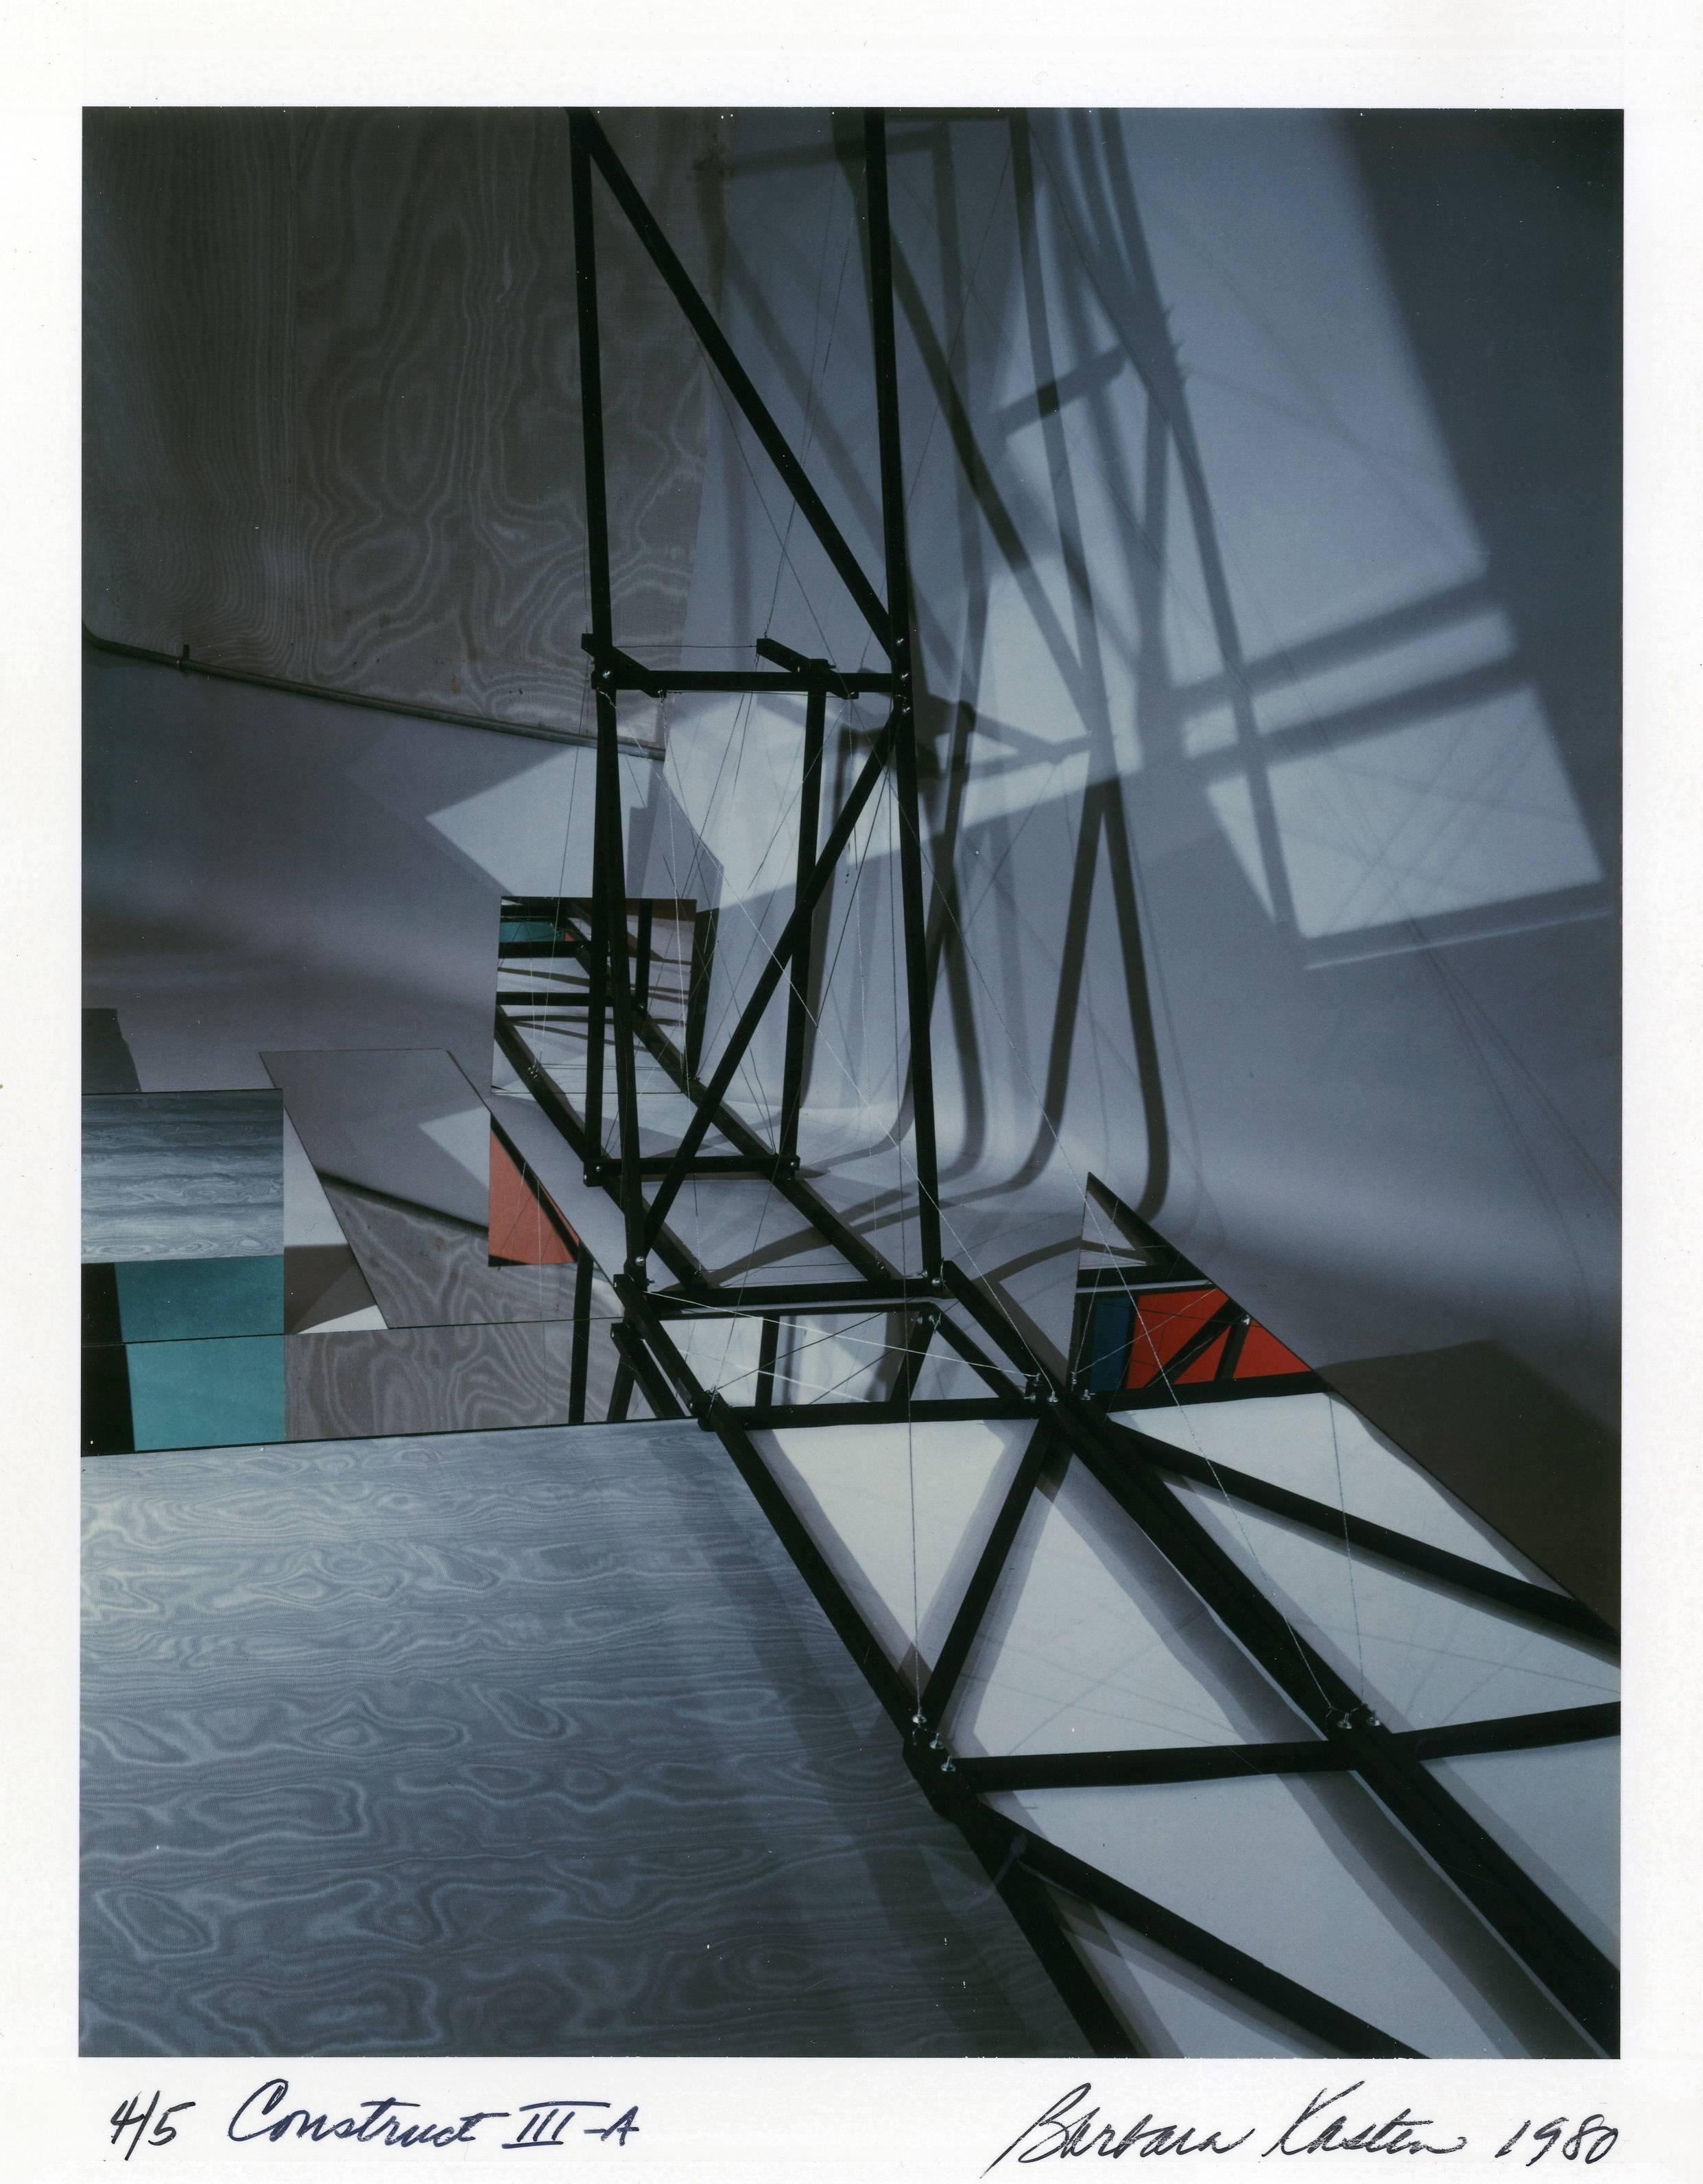 Barbara Kasten Abstract Photograph - Construct III-A